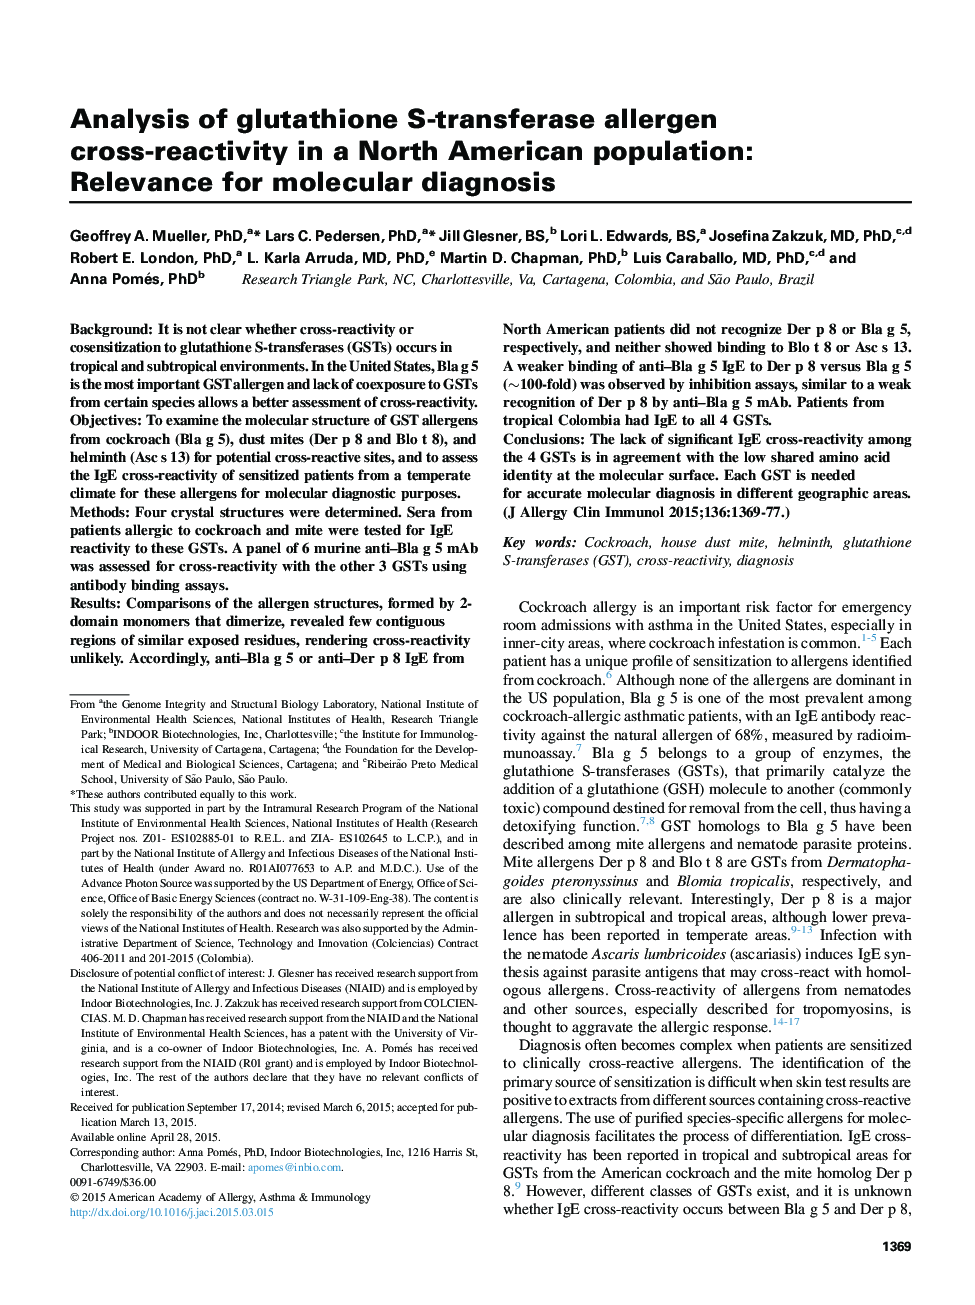 Analysis of glutathione S-transferase allergen cross-reactivity in a North American population: RelevanceÂ for molecular diagnosis